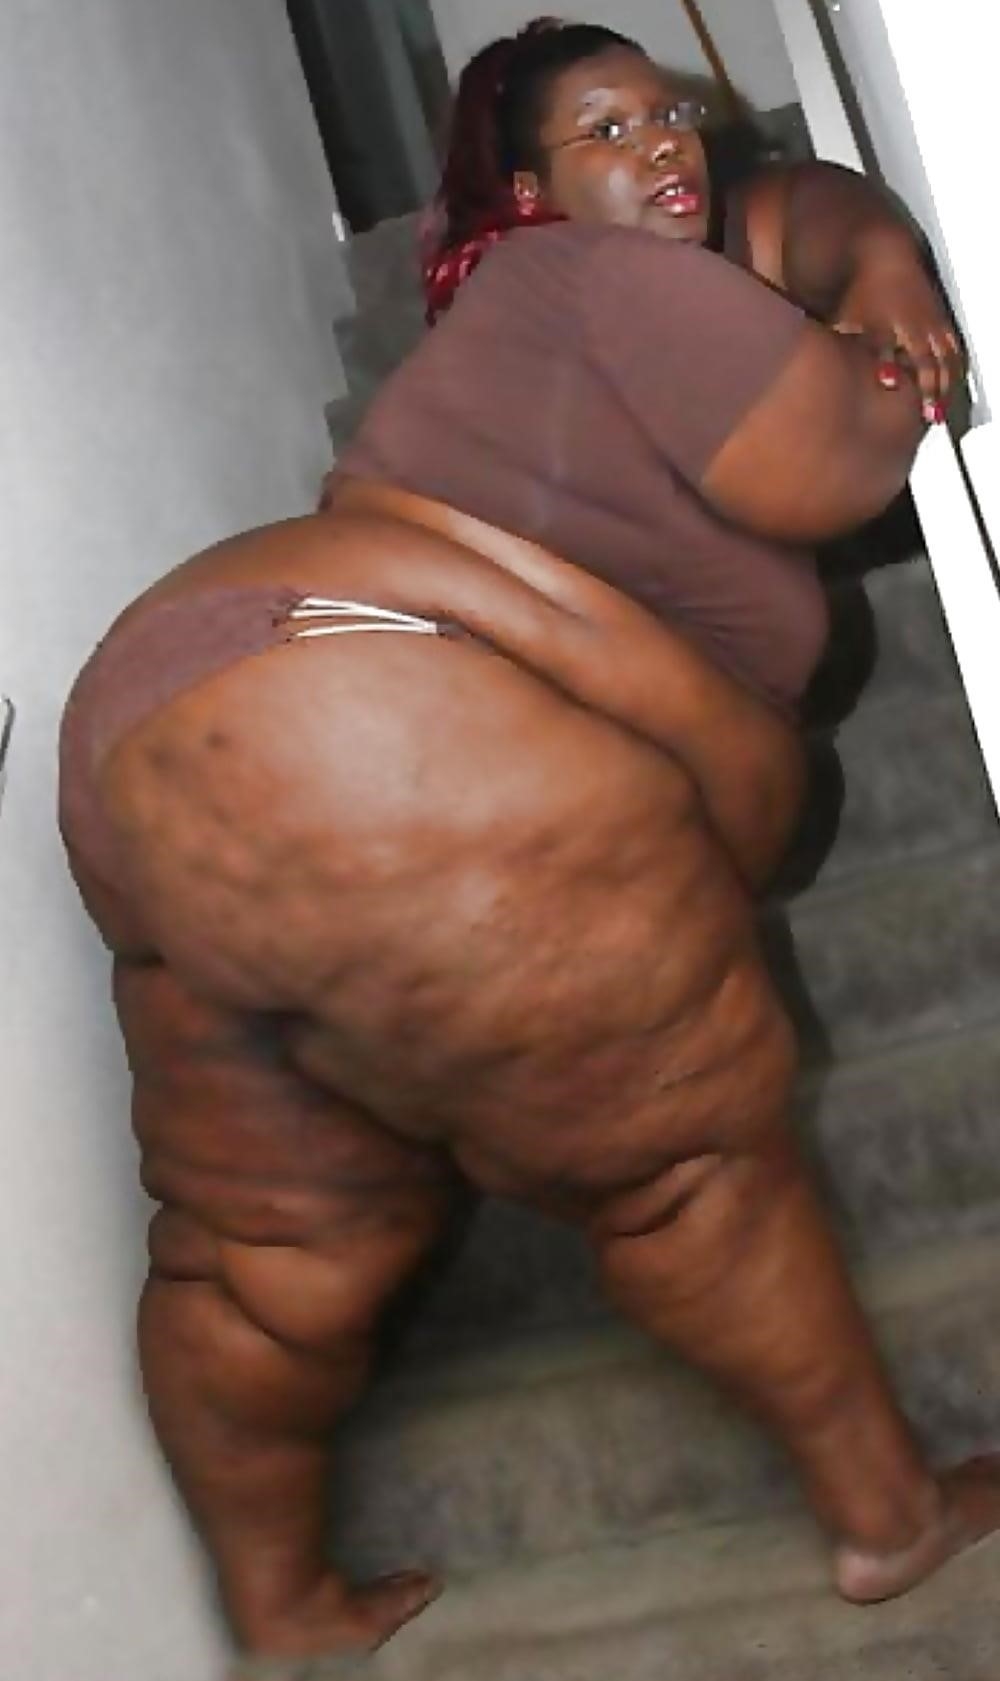 That ebony fat jiggly booty tho